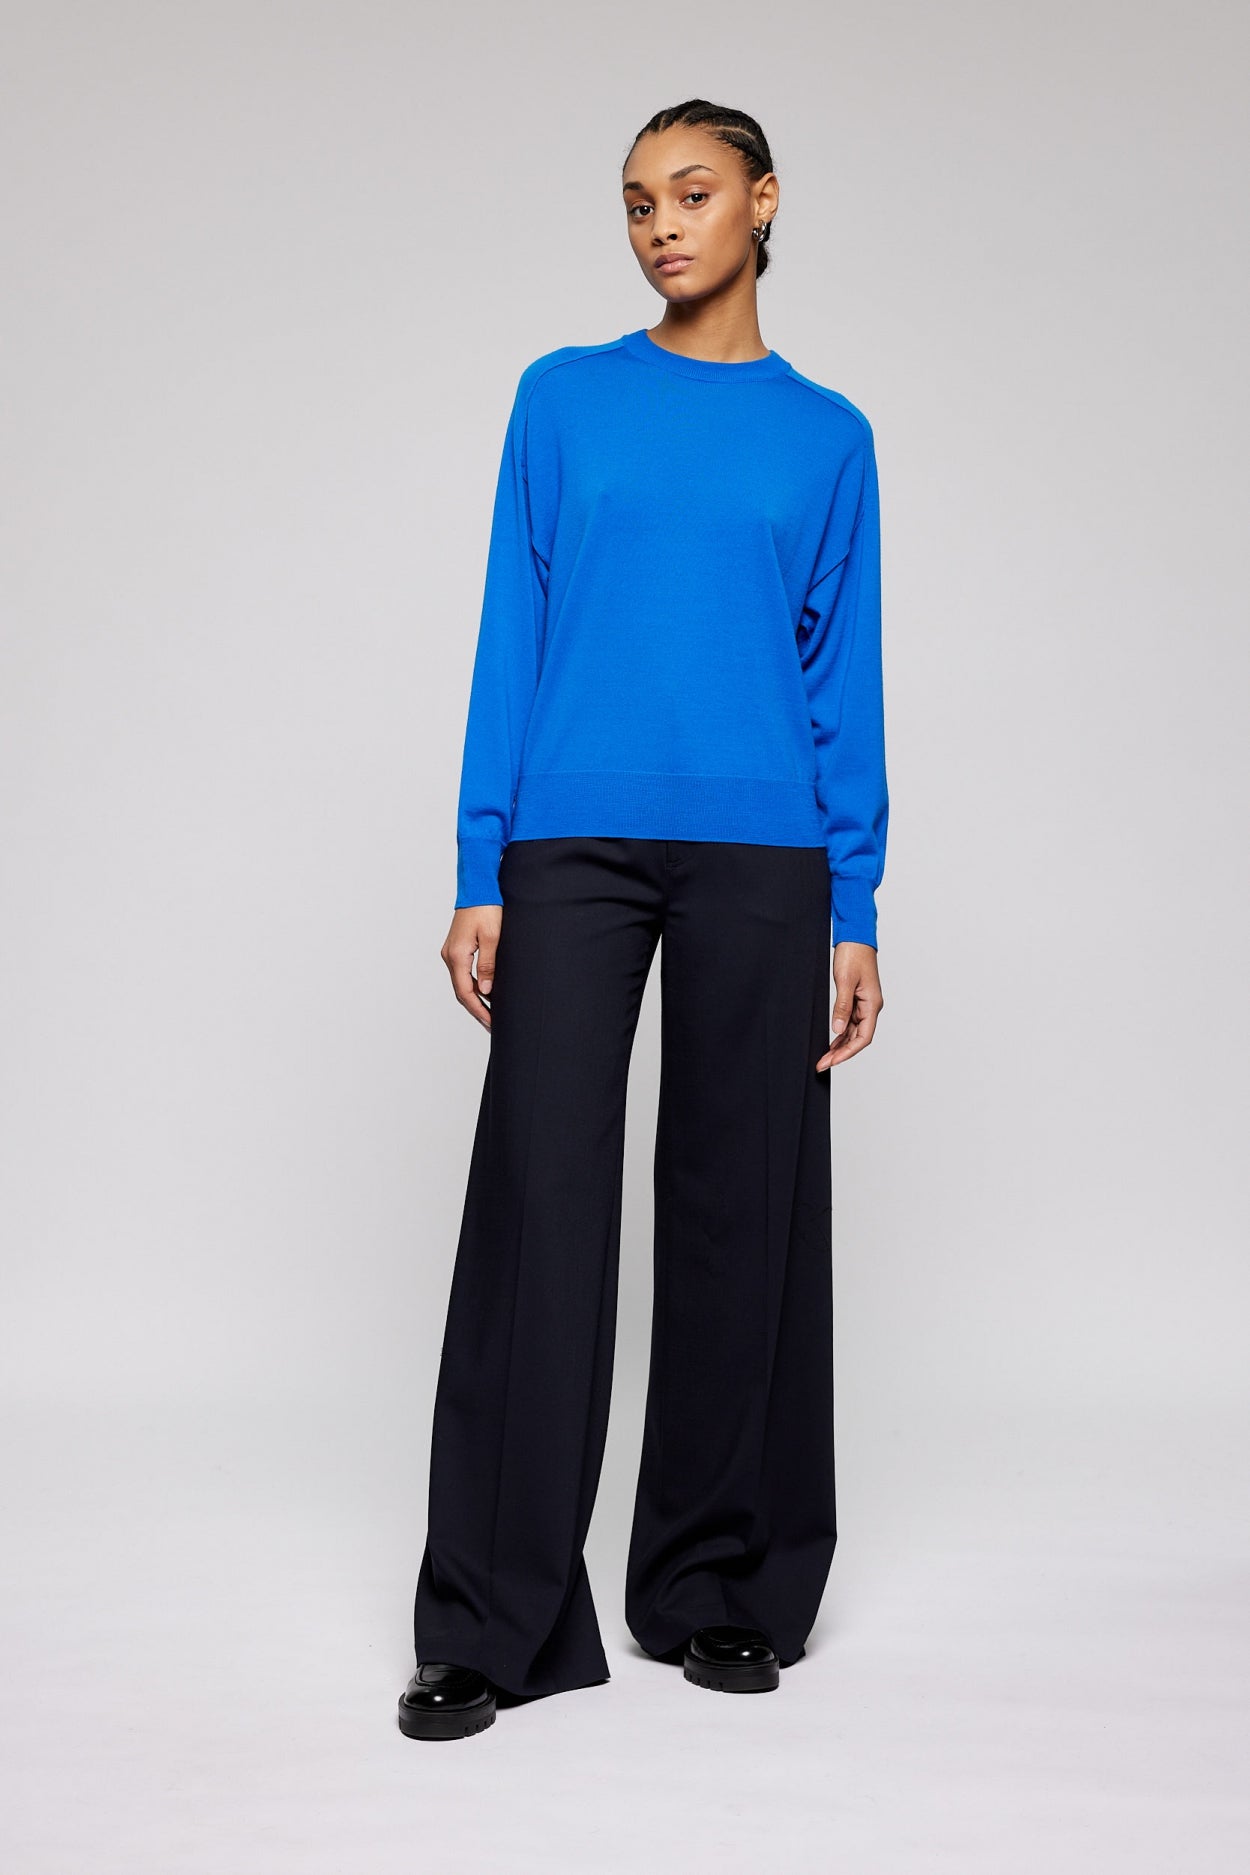 KORY pullover | ROYAL BLUE